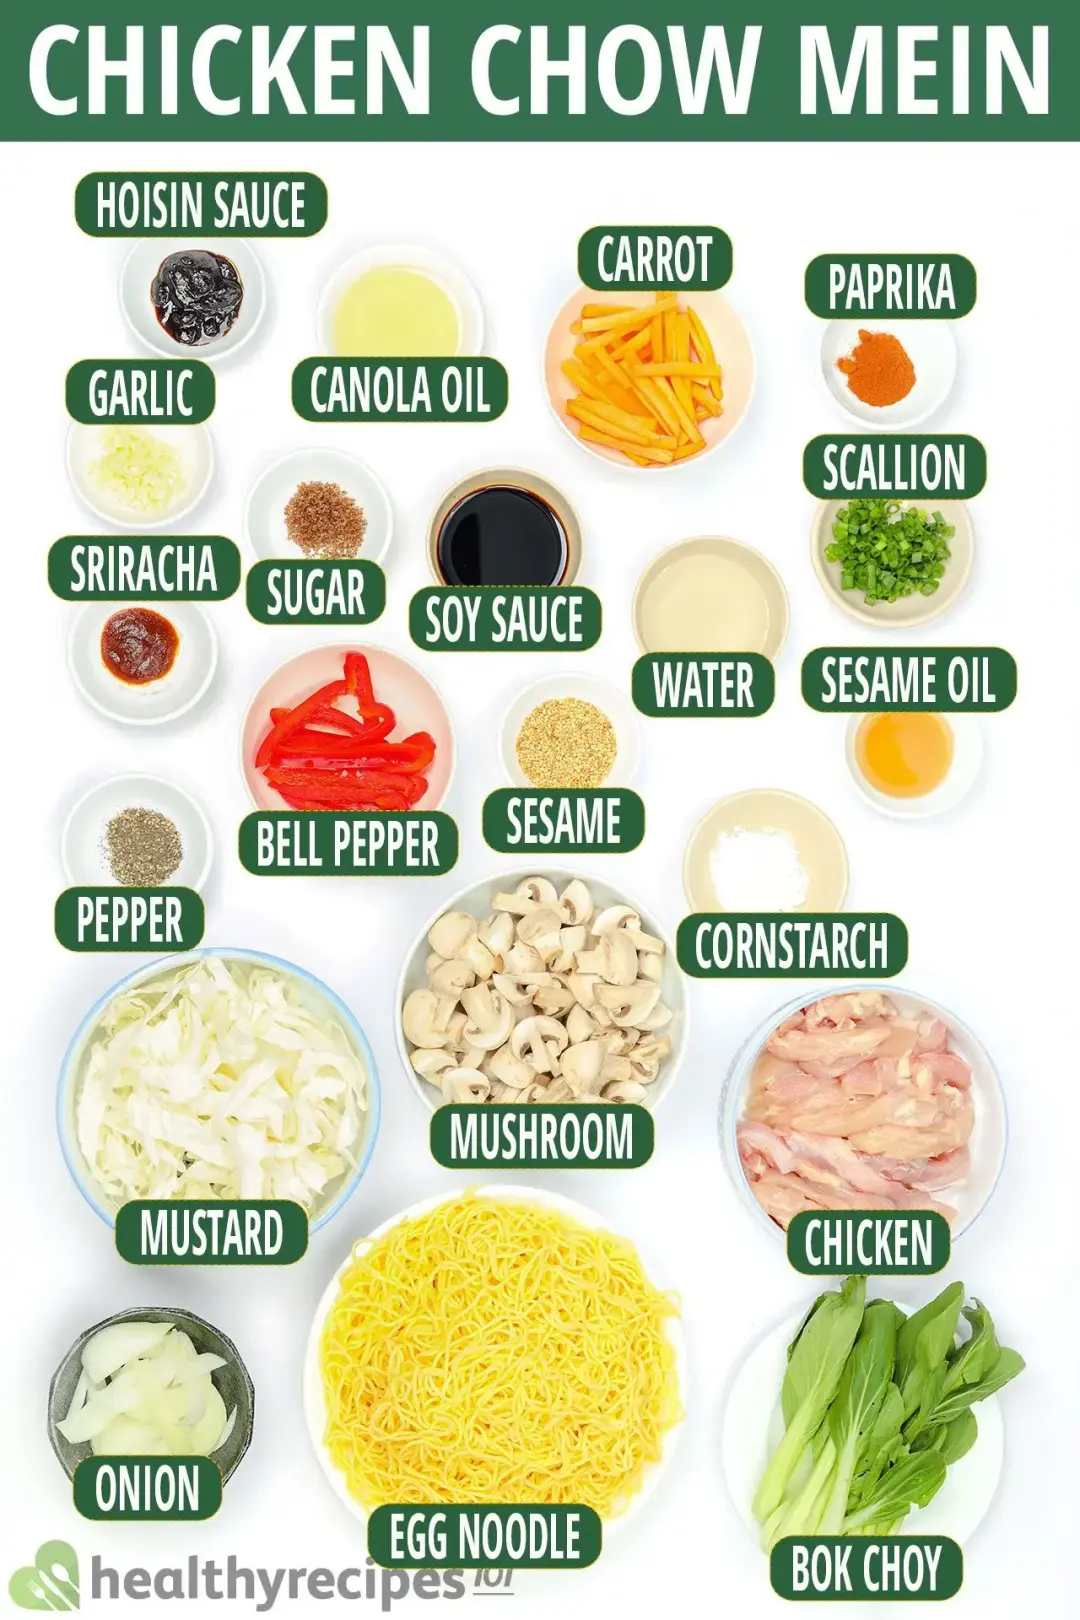 Ingredients for Chicken Chow Mein